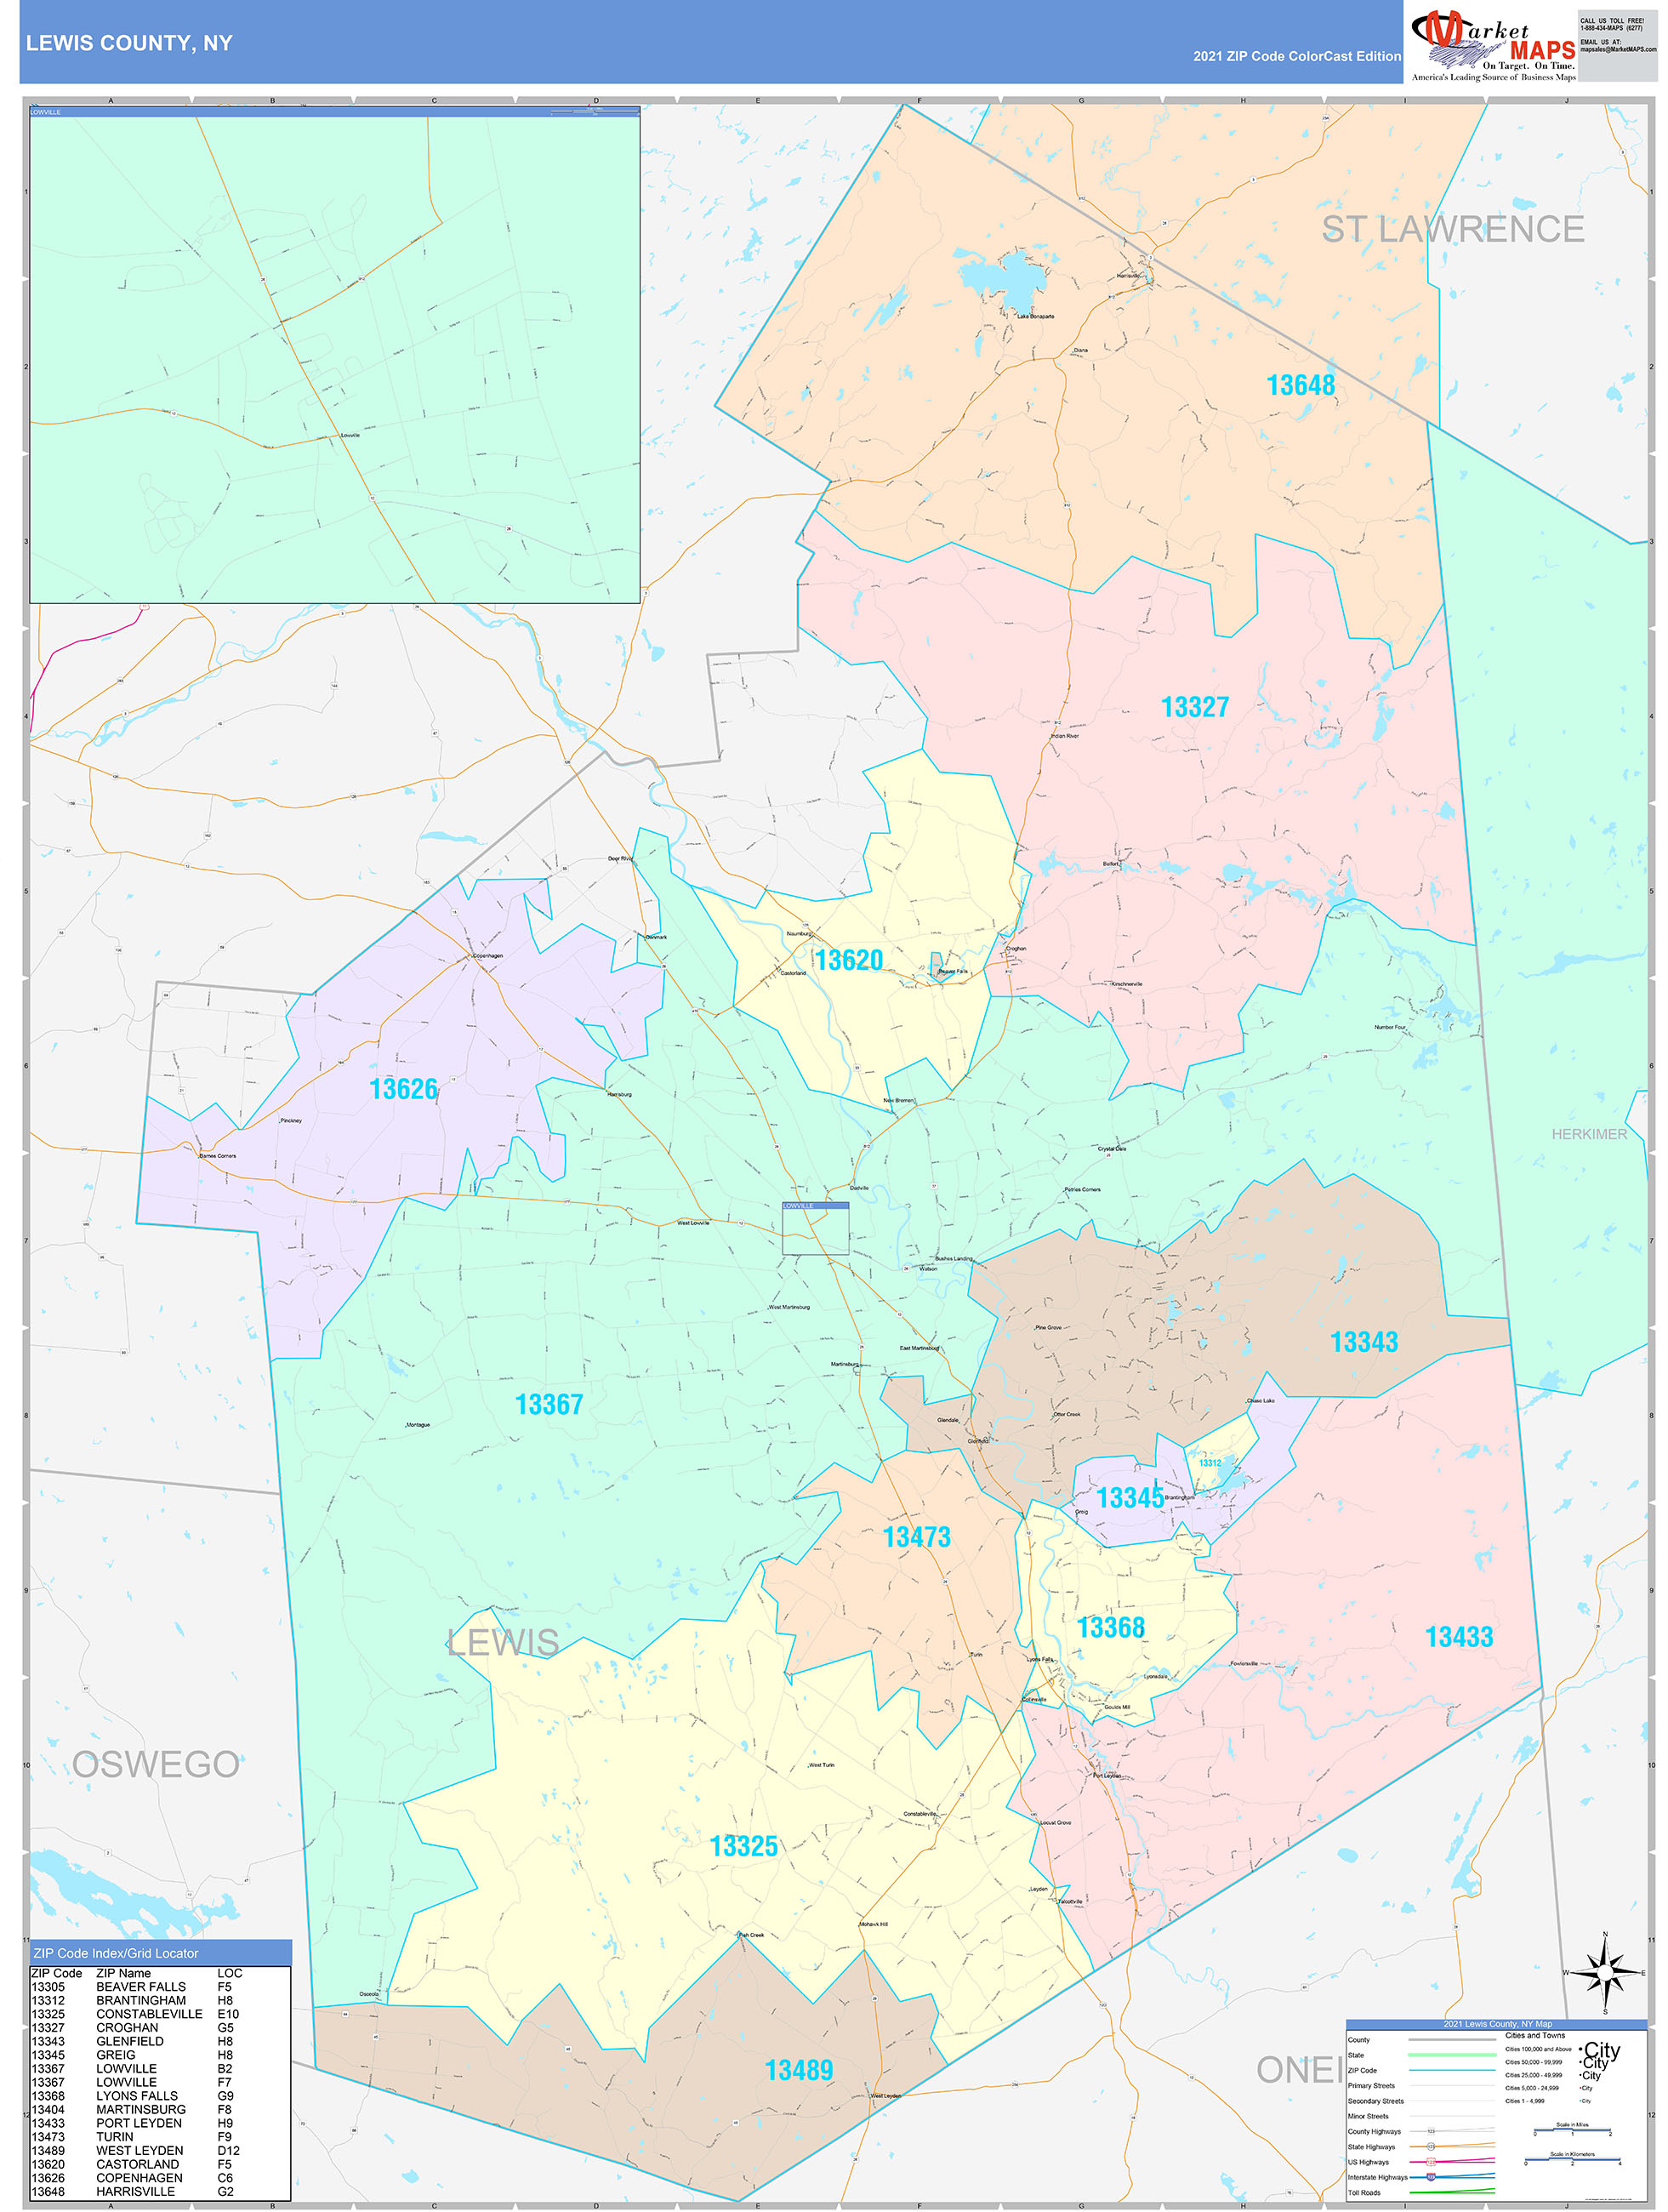 lewis county parcel map